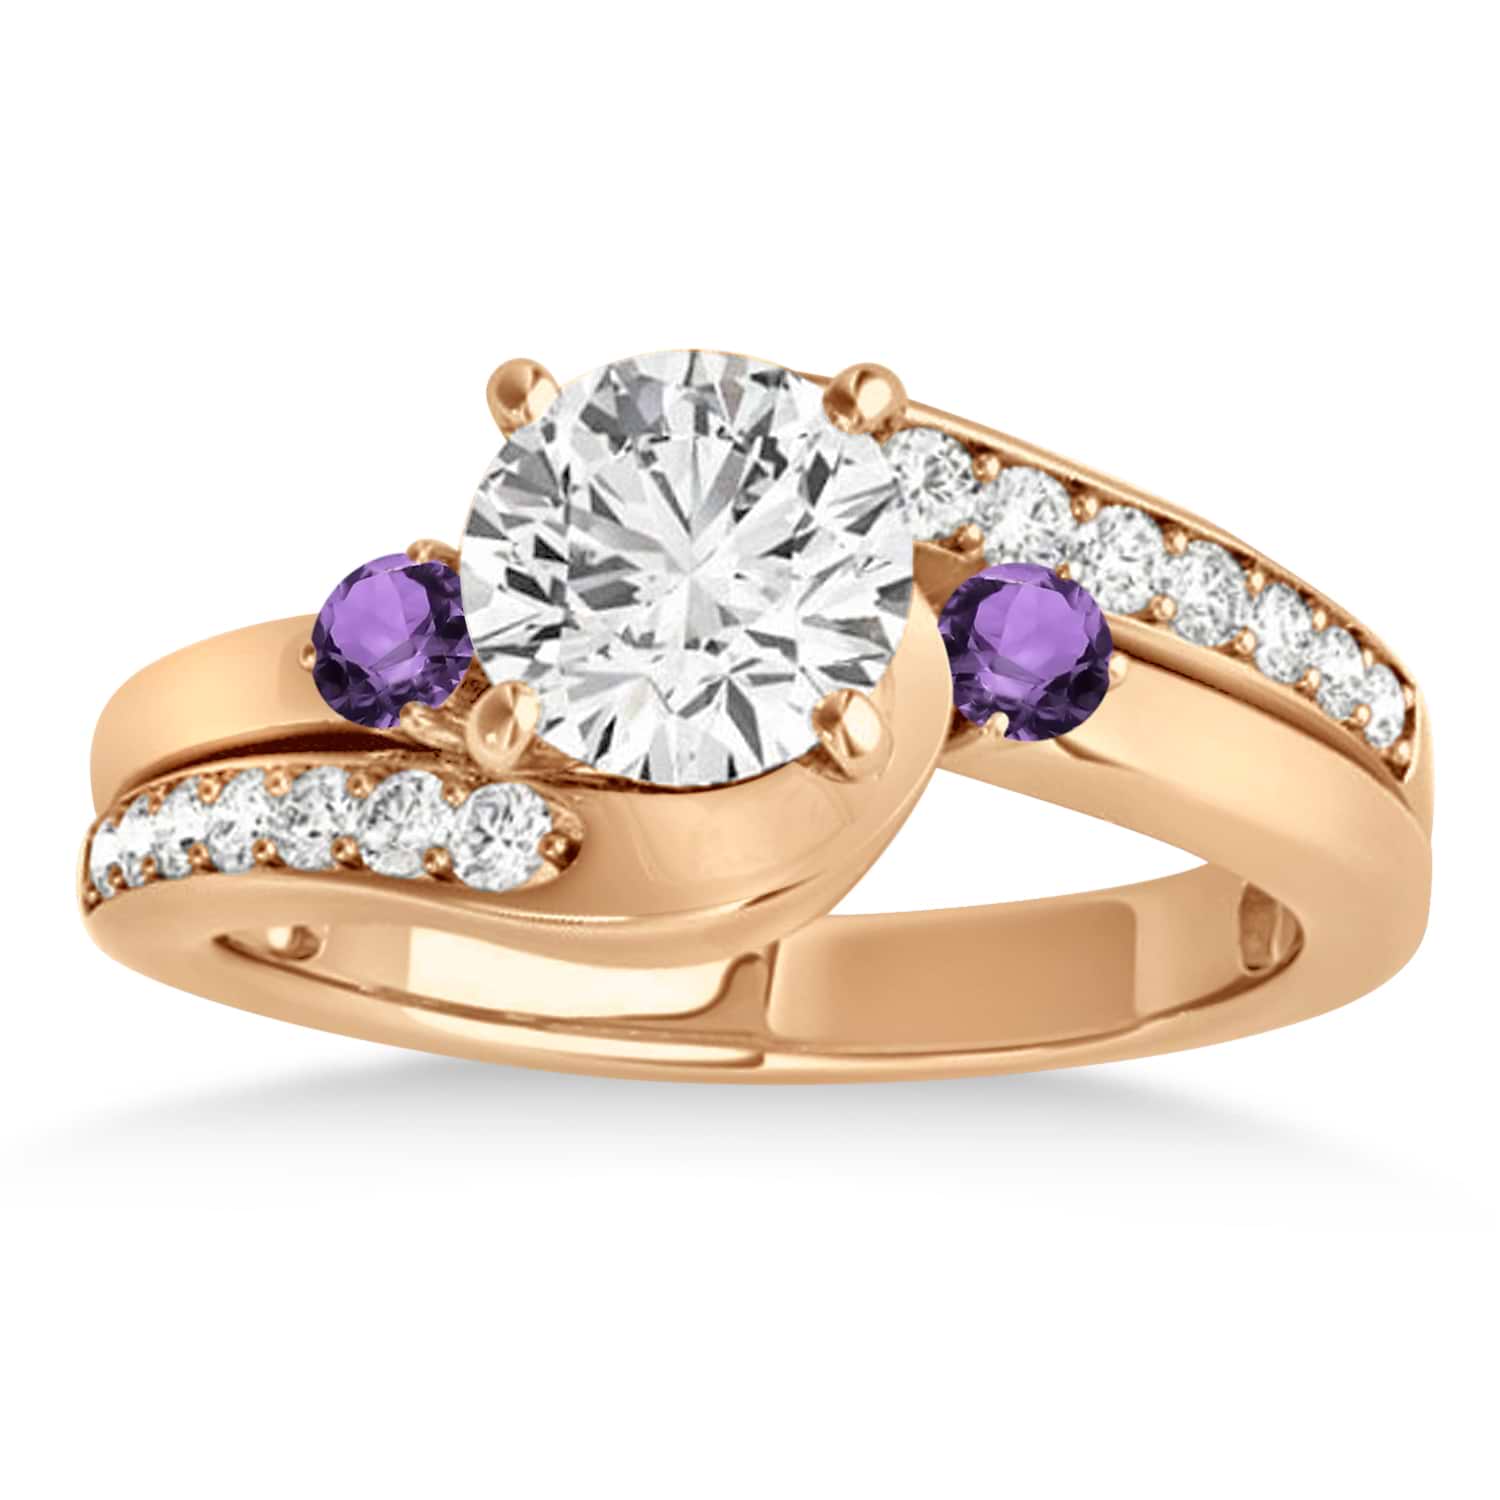 Swirl Design Amethyst & Diamond Engagement Ring Setting 14k Rose Gold 0.38ct